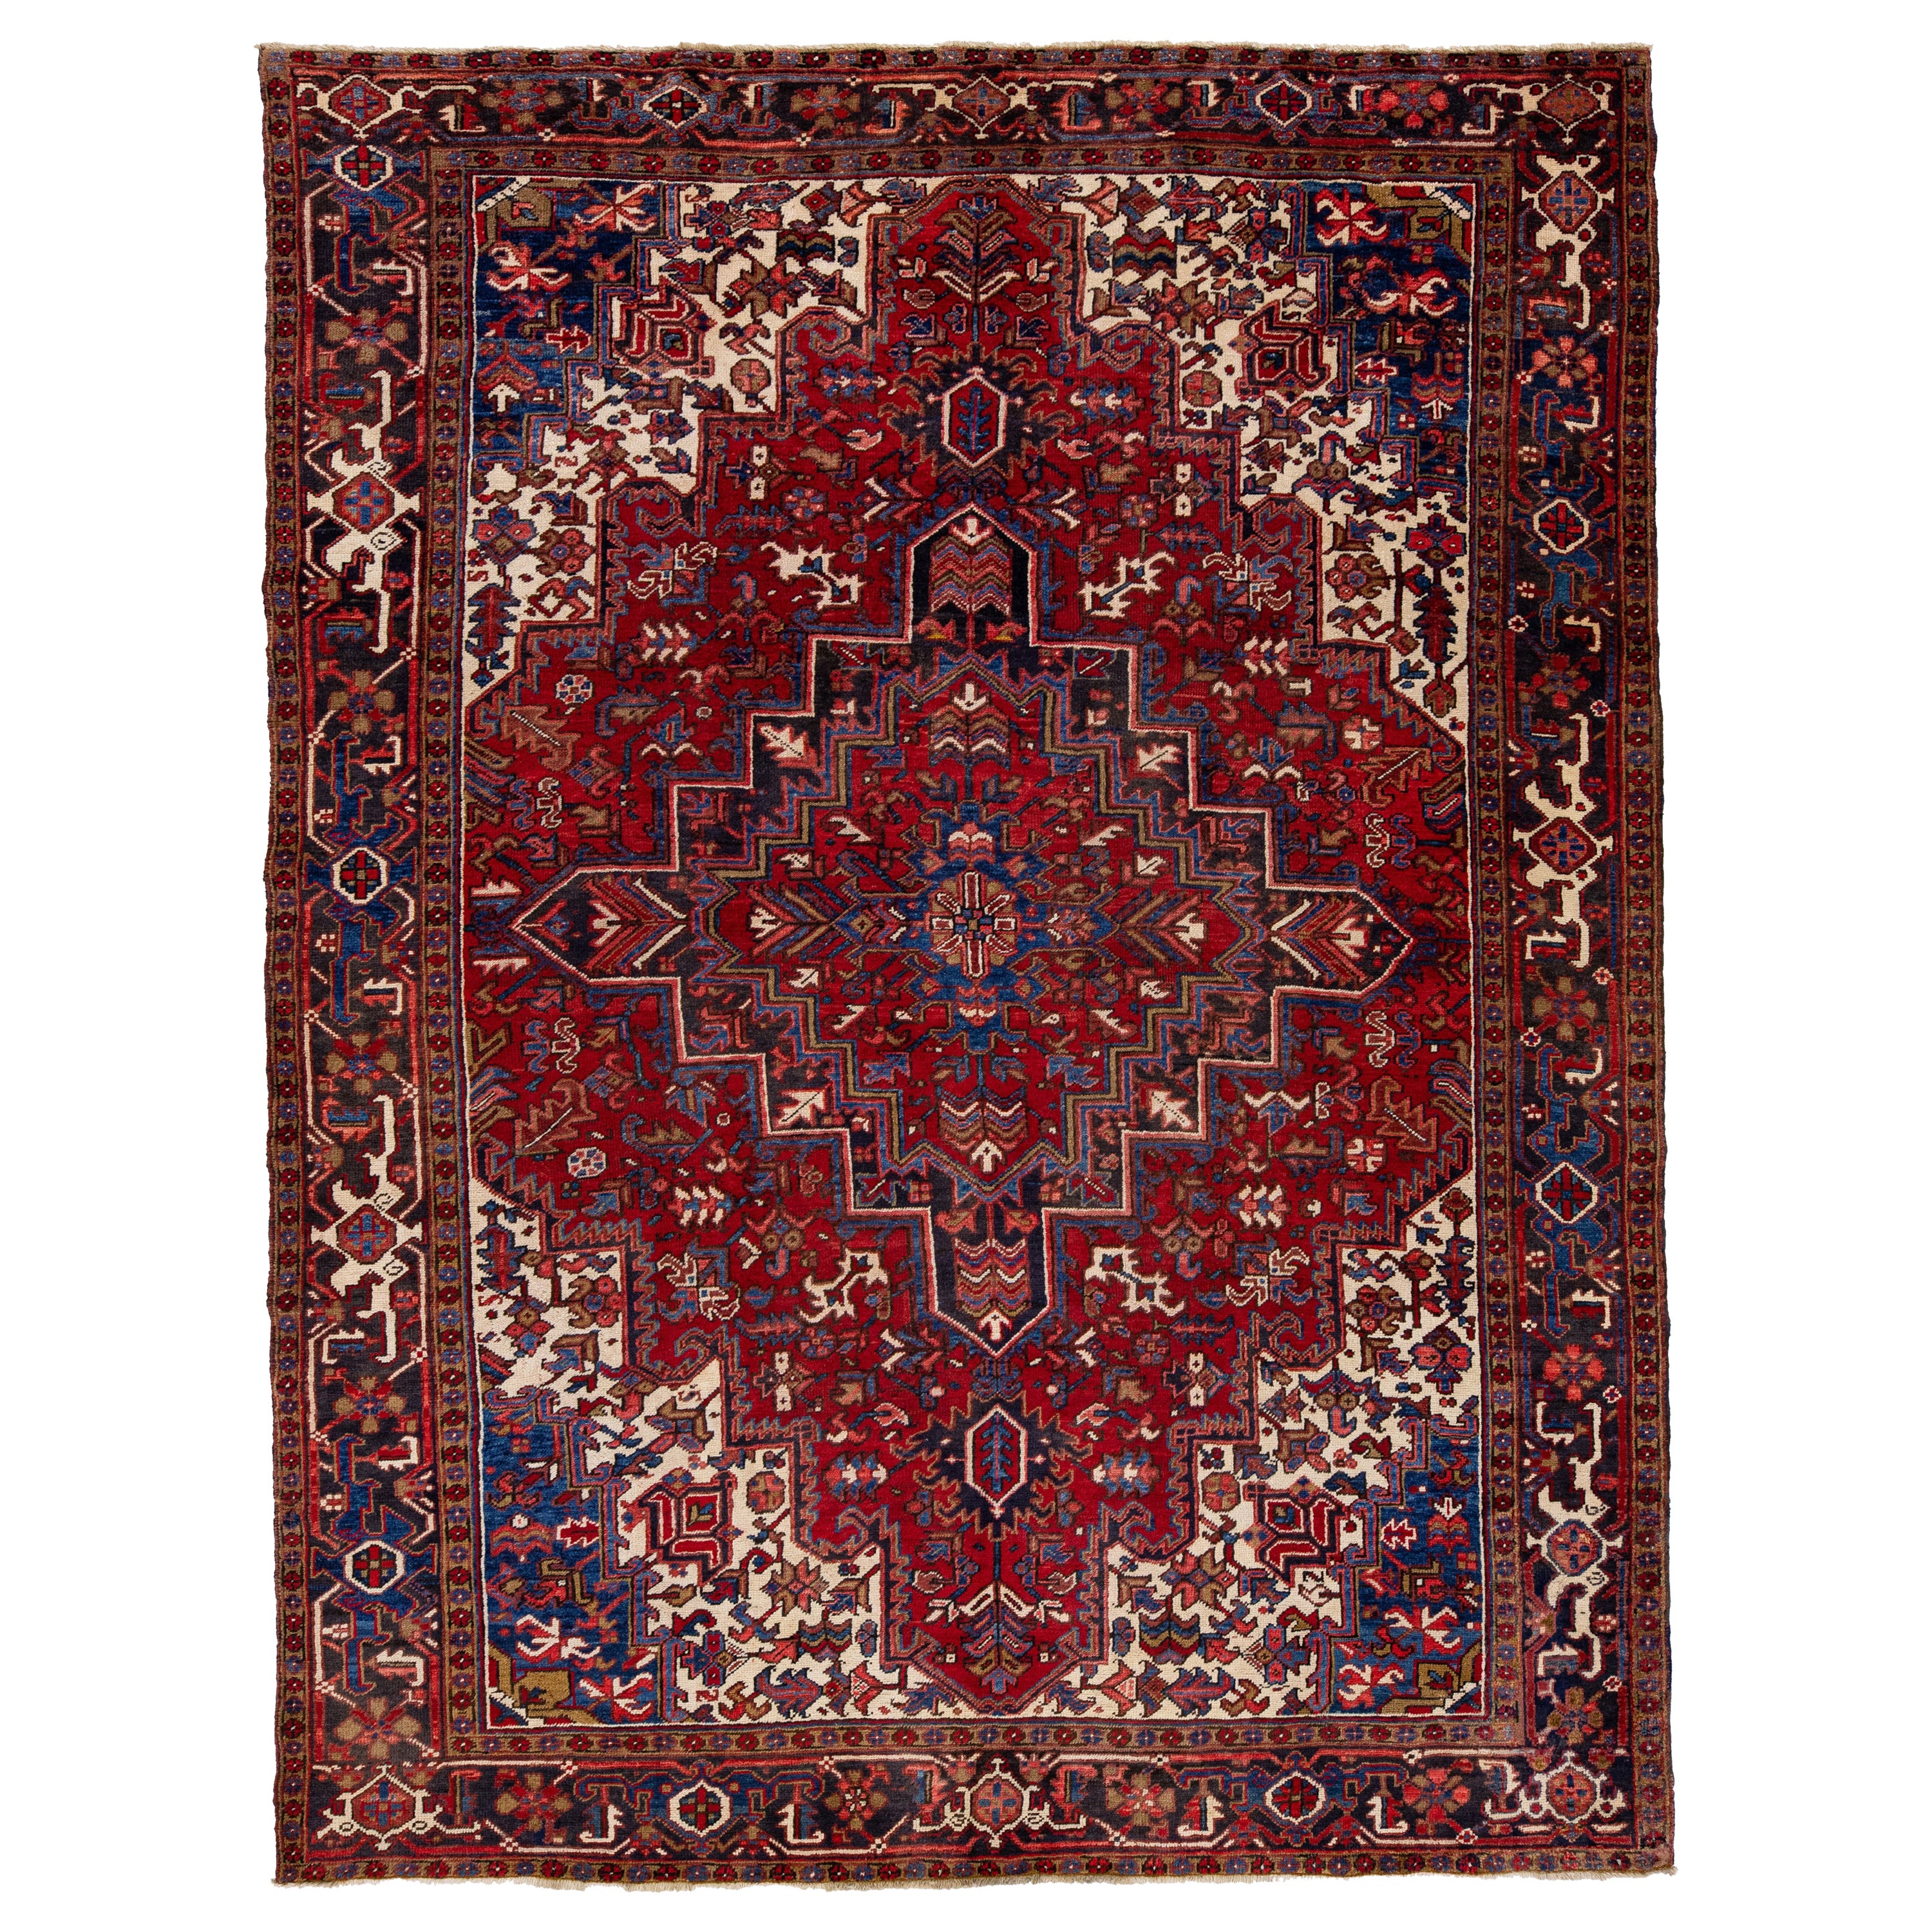 Antique Persian Heriz Handmade Red & Blue Wool Rug with Medallion Motif